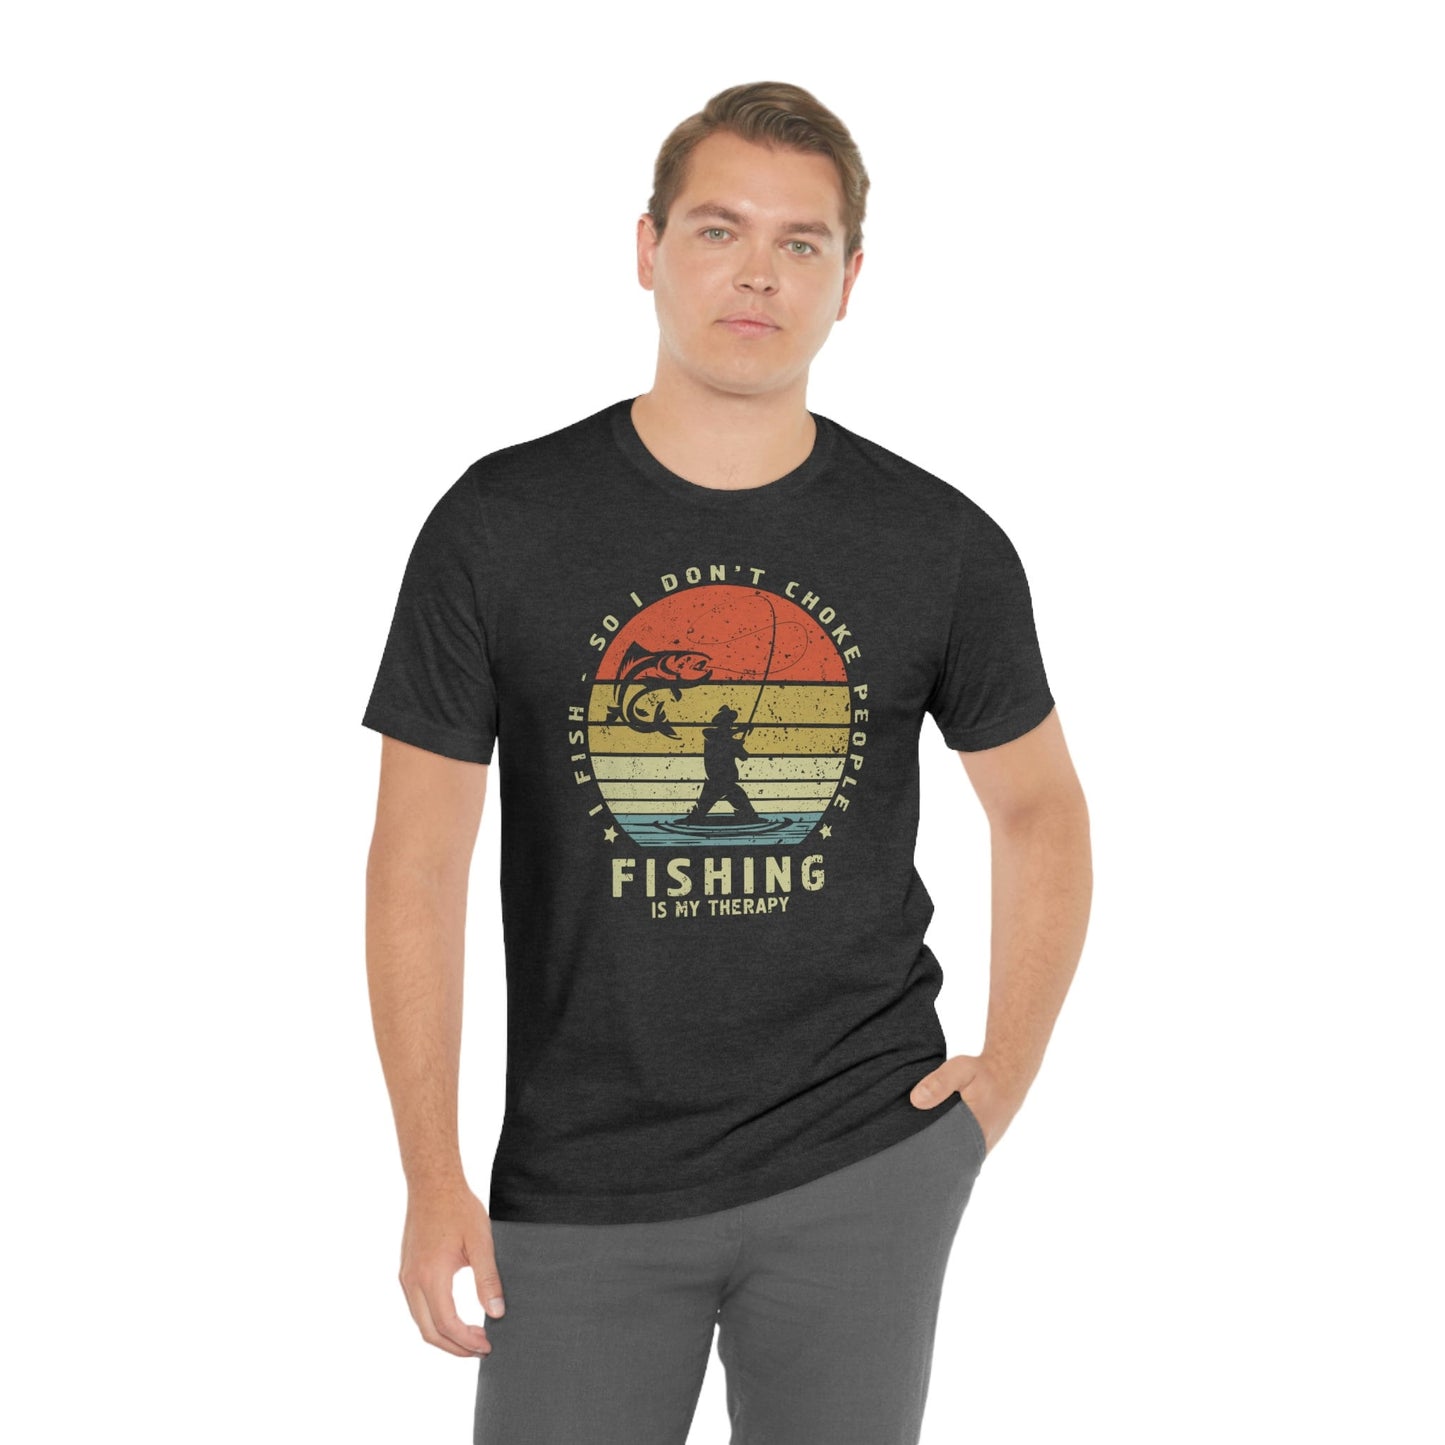 Fishing Gift T-shirt for Husband - Fishing is my therapy - Fishy Tee T-shirt